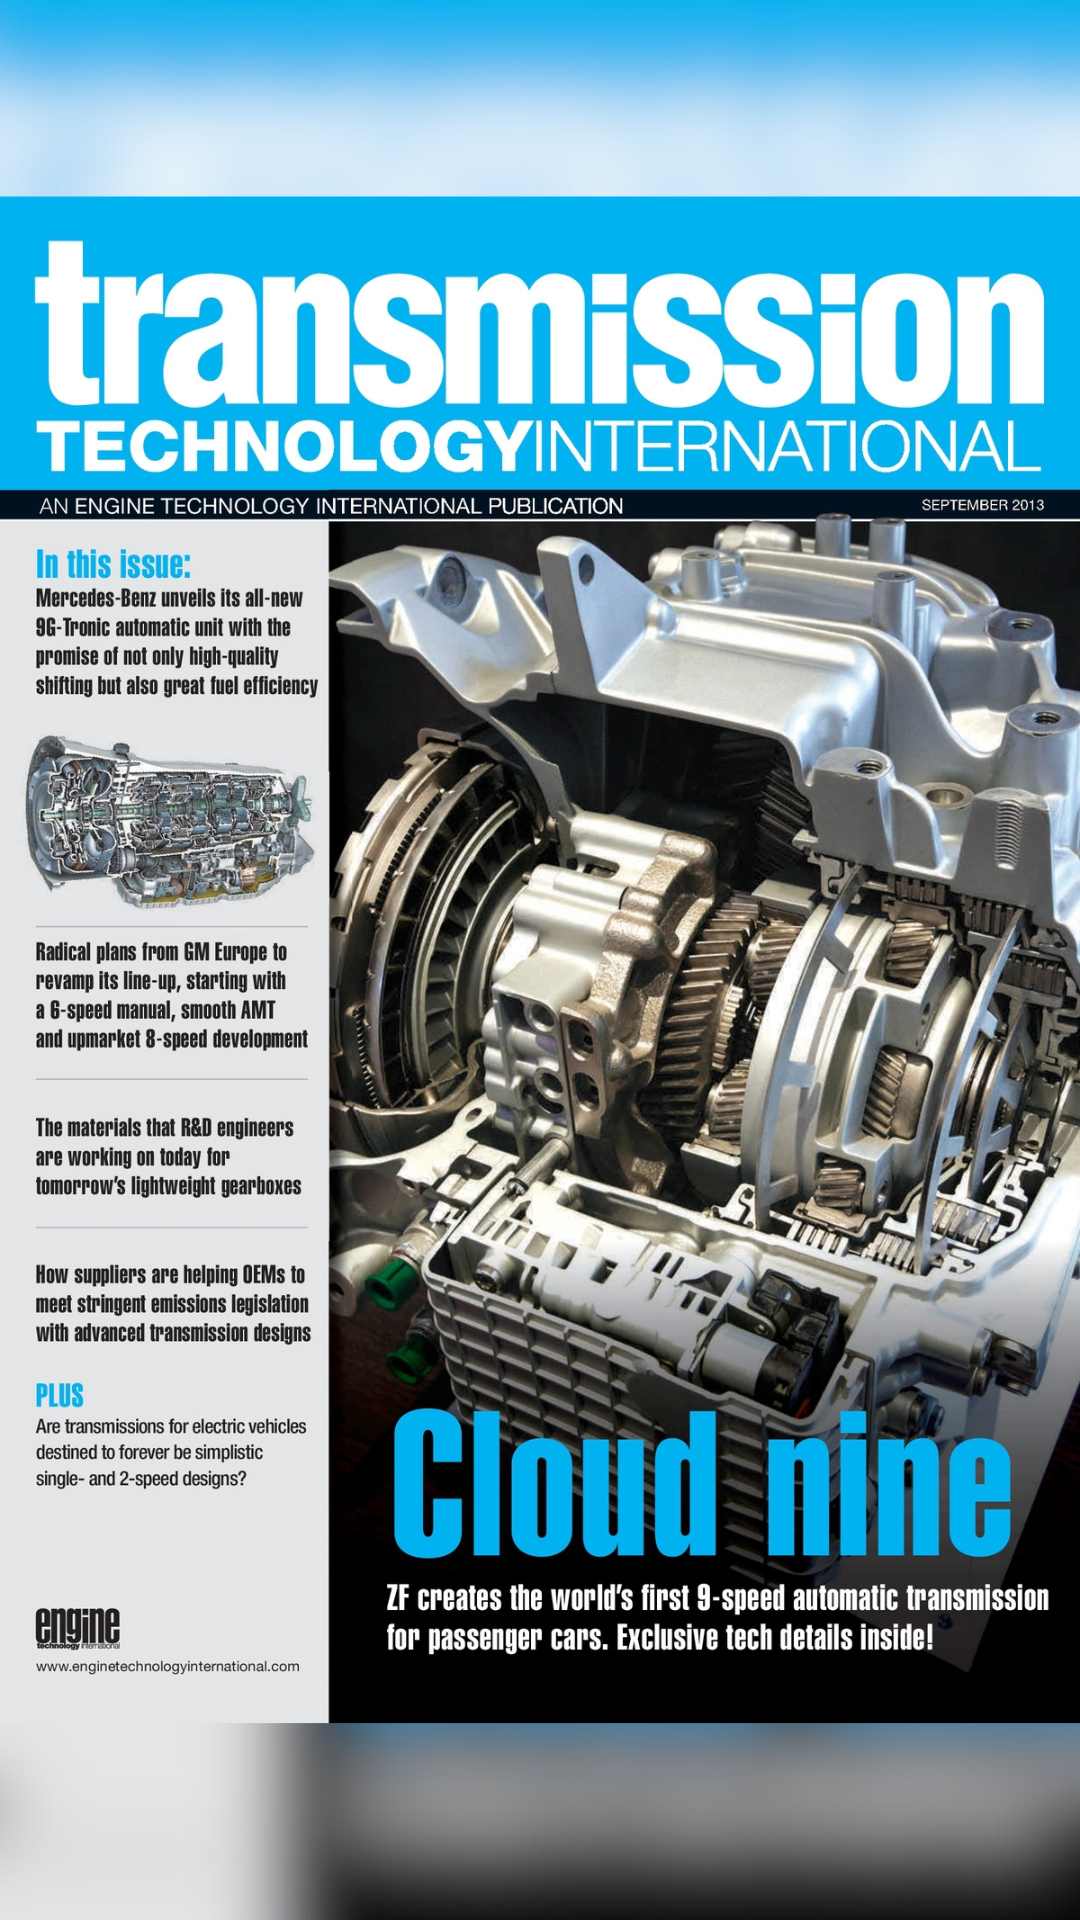 Transmission Technology International Magazine September 2013 'Cloud Nine'.